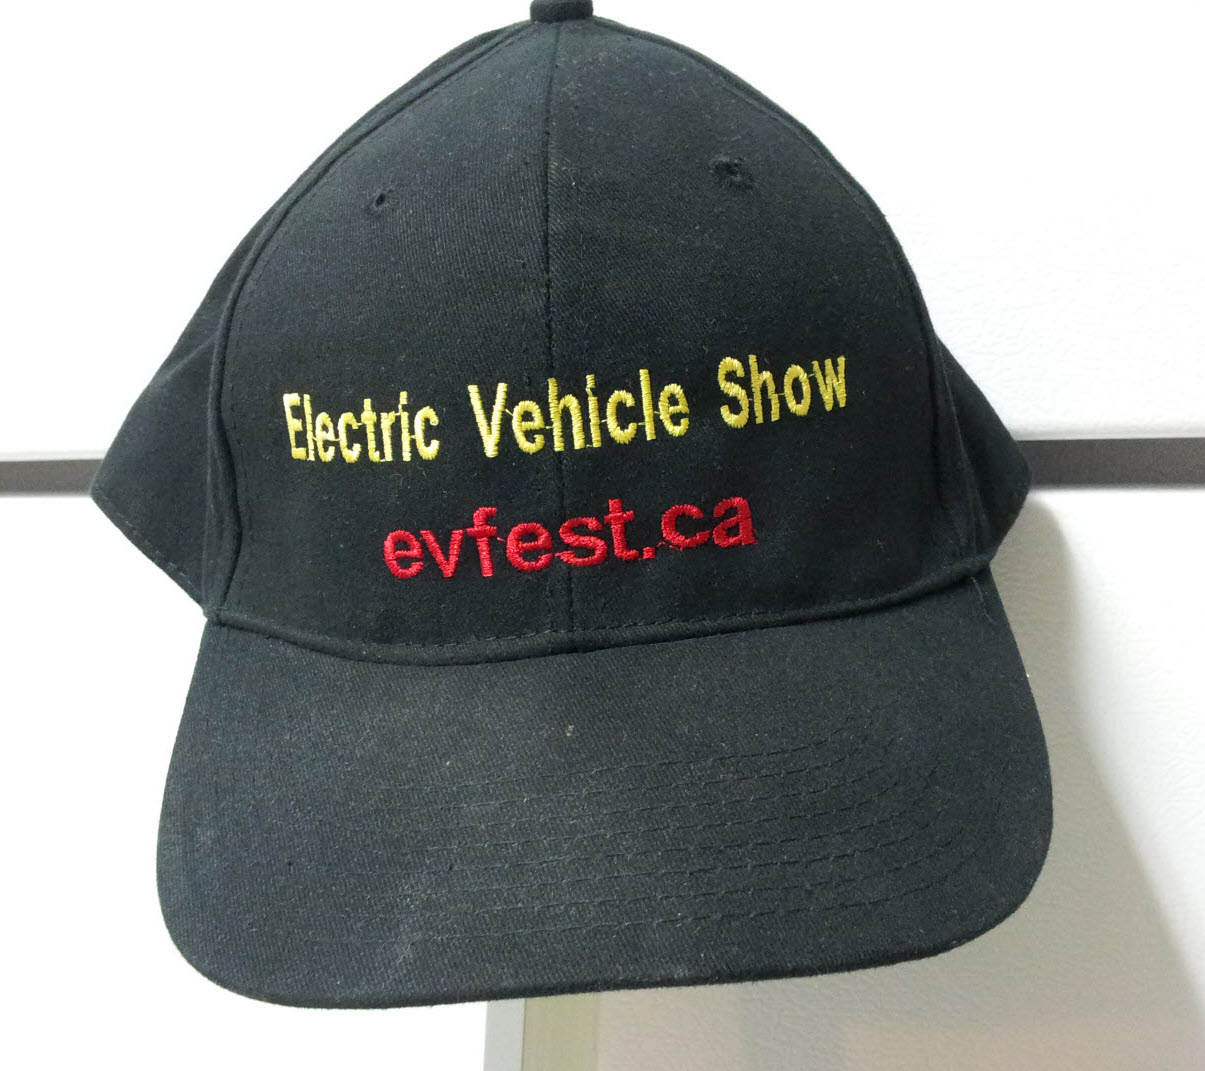 Get an EV Fest Hat!